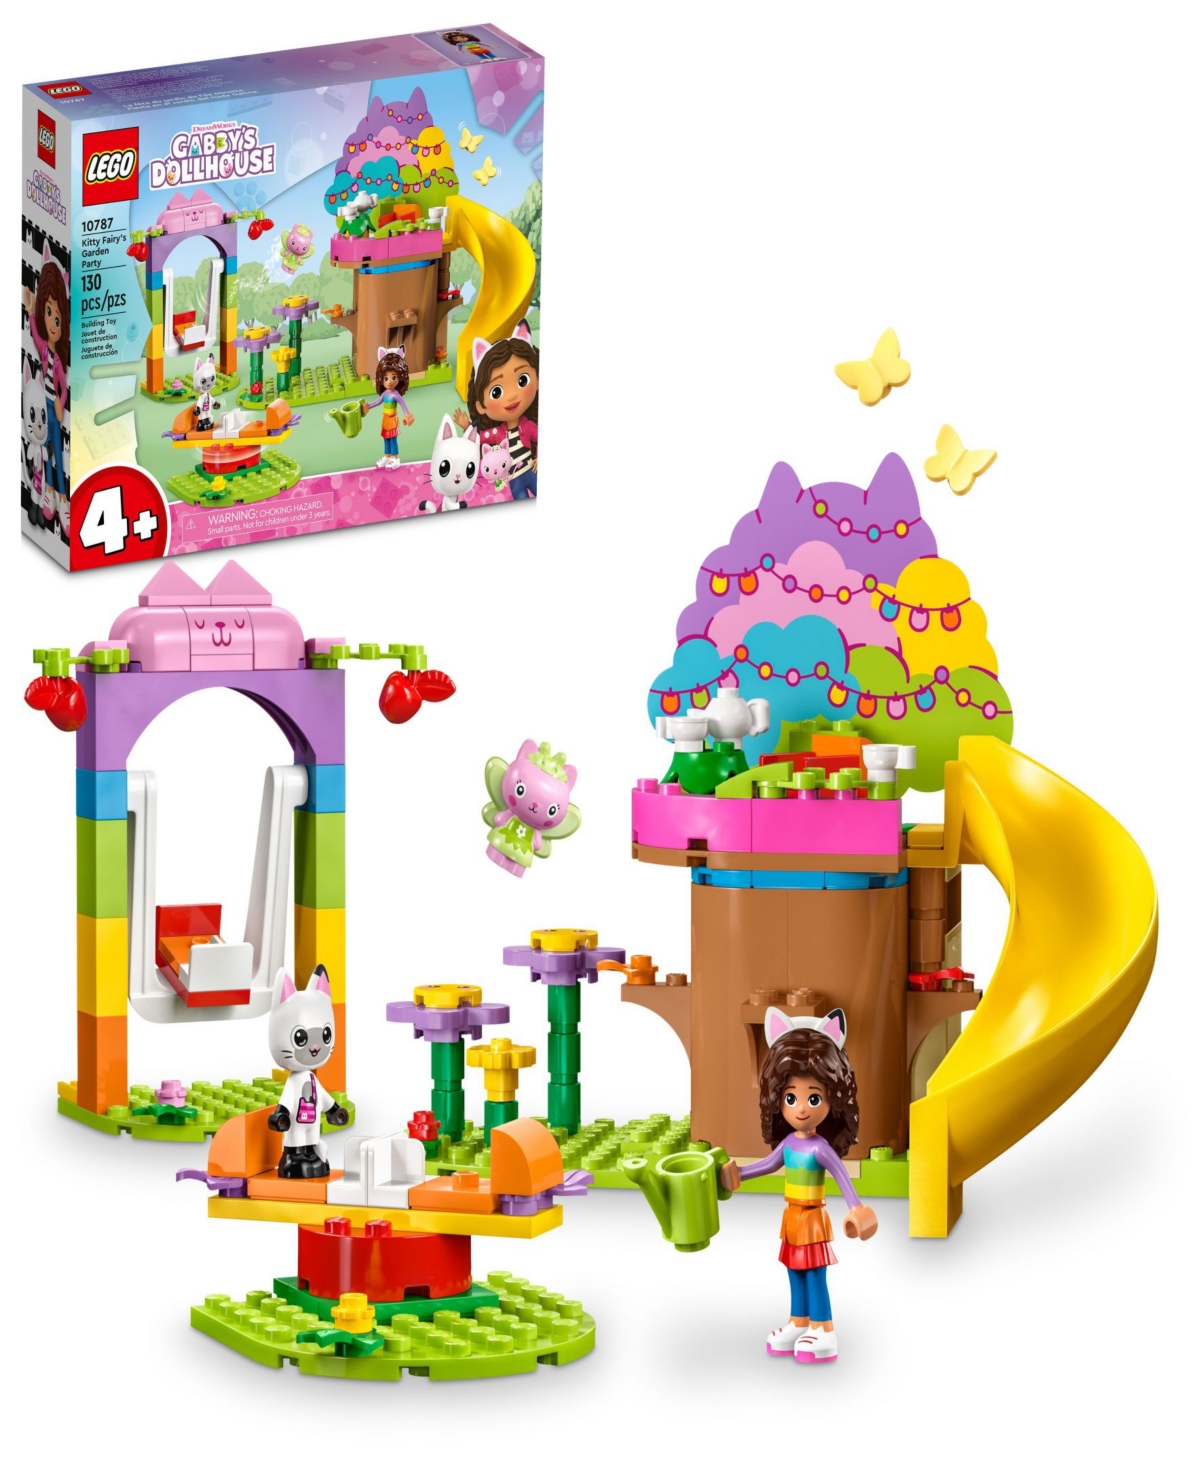 Lego Kids' Dreamworks Gabby's Dollhouse 10787 Kitty Fairy's Garden Party Toy Building Set In Multicolor